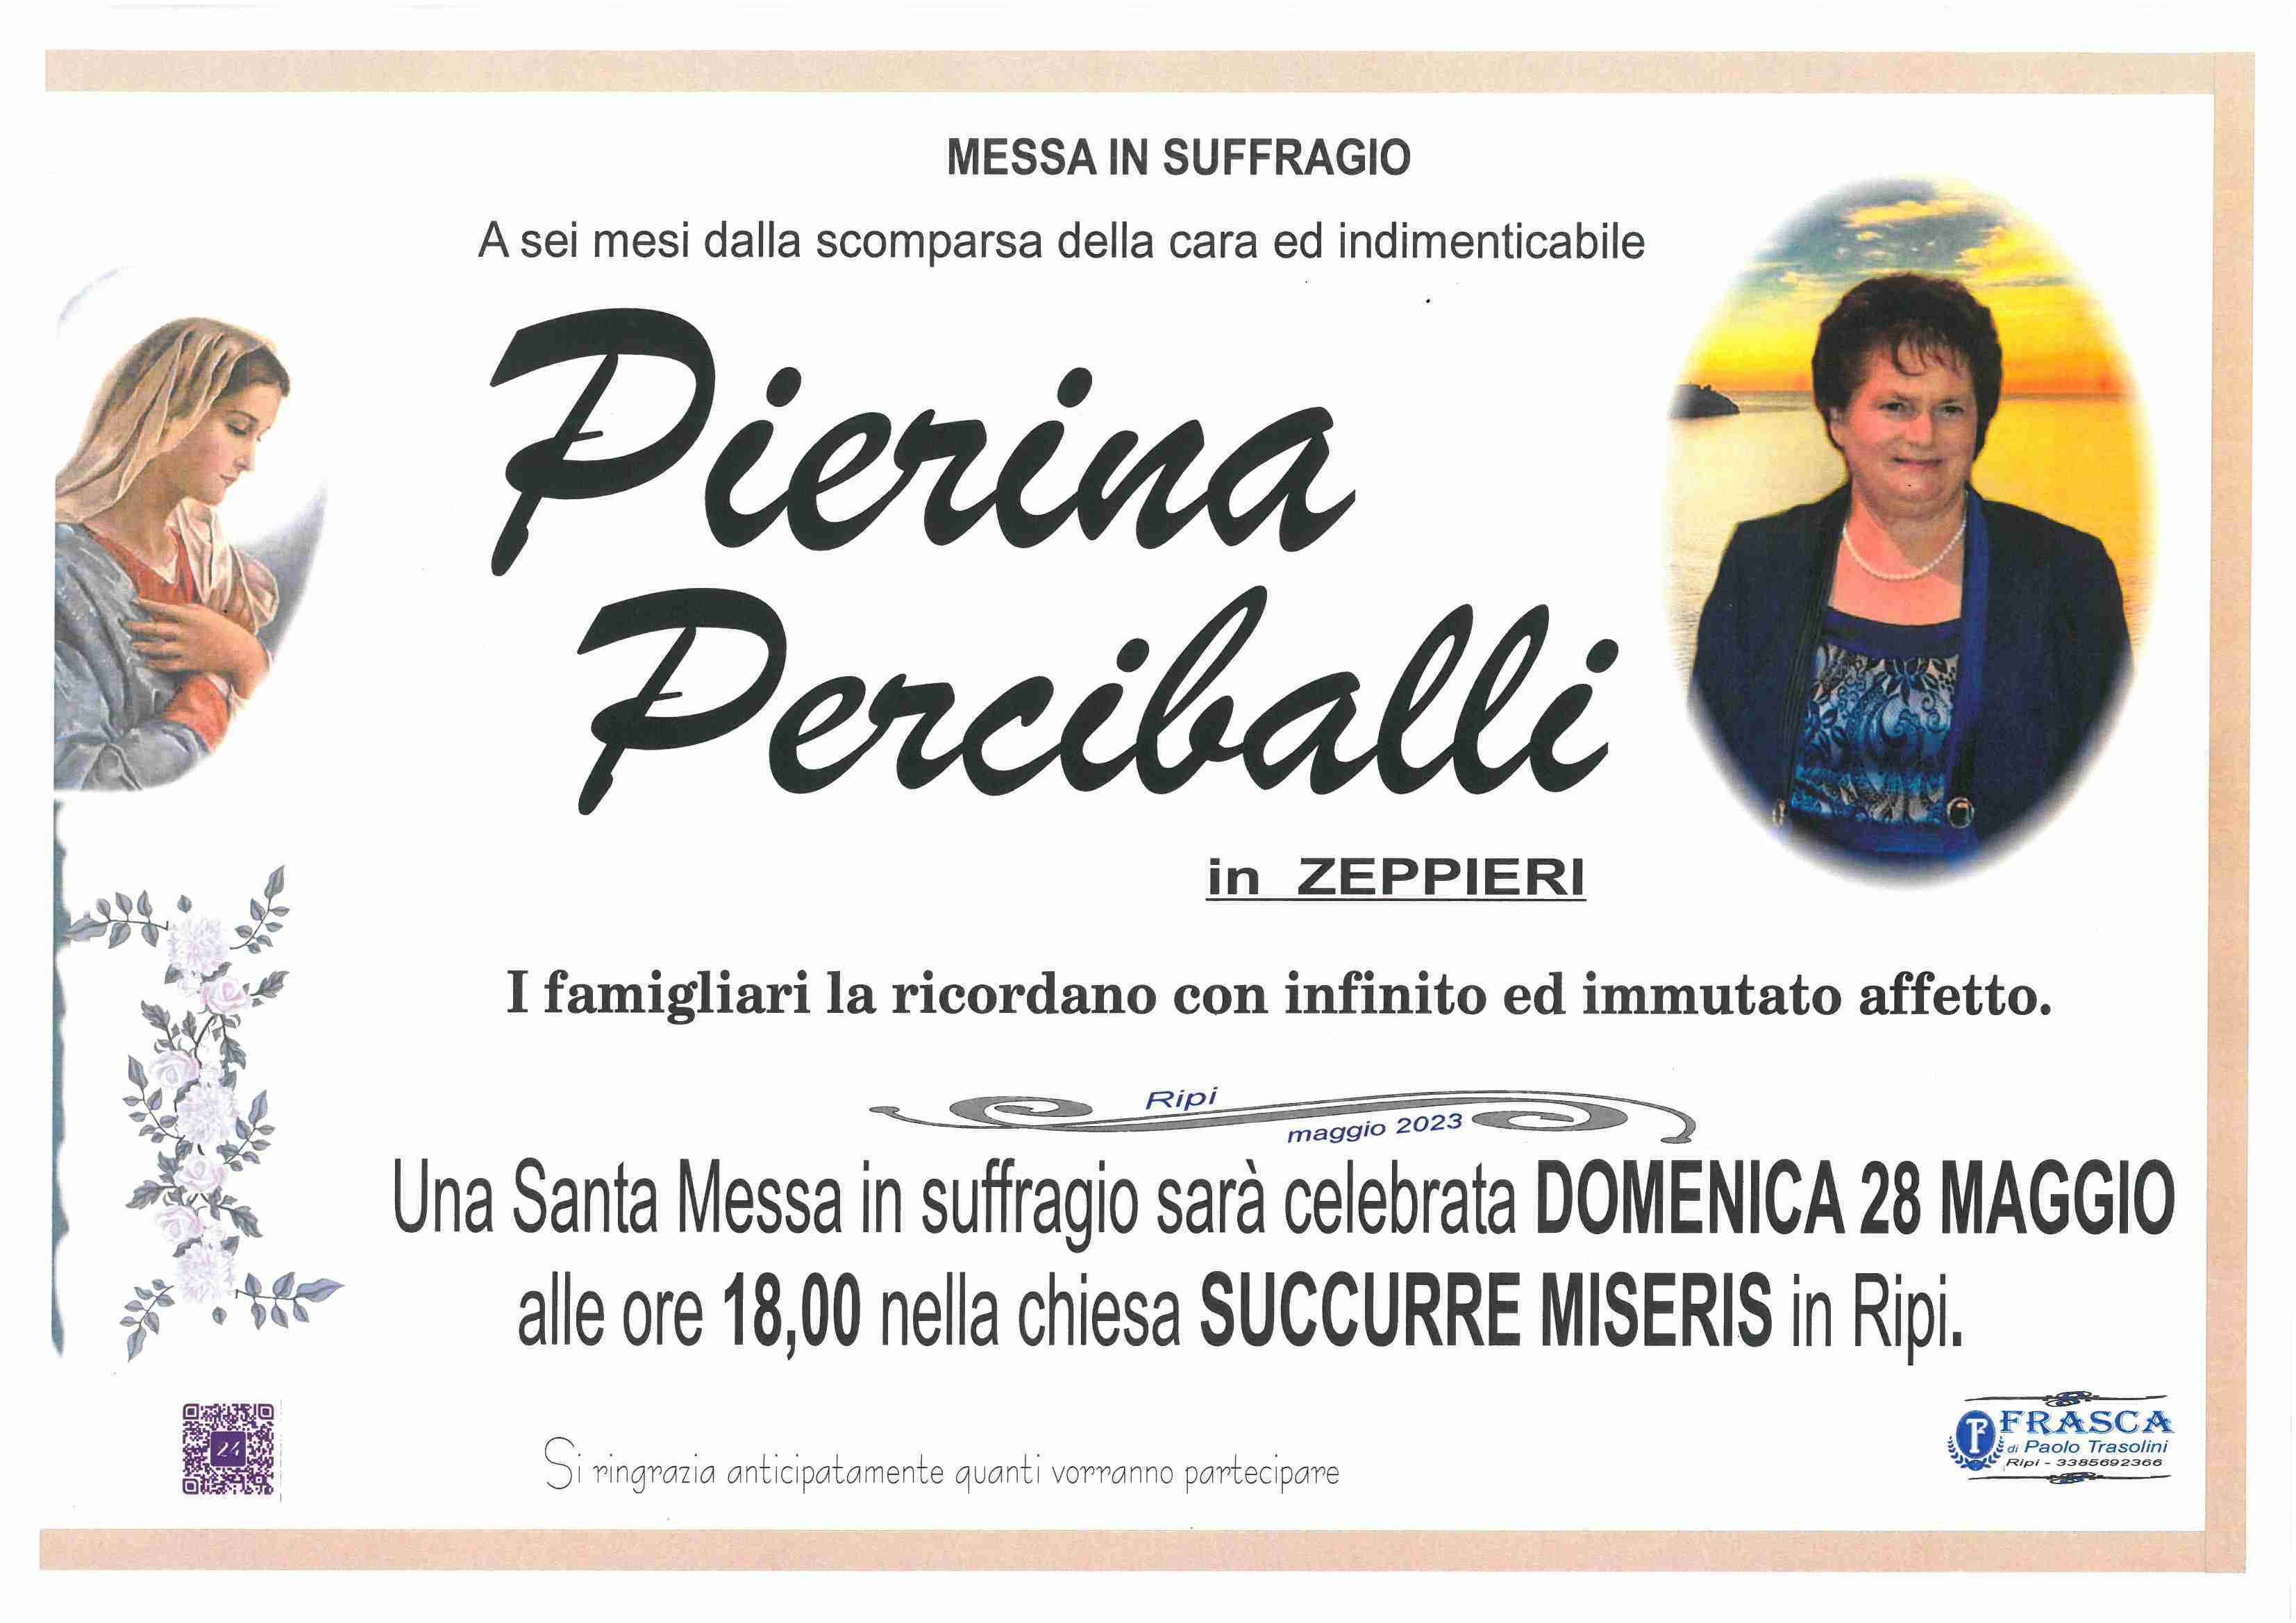 Pierina Perciballi